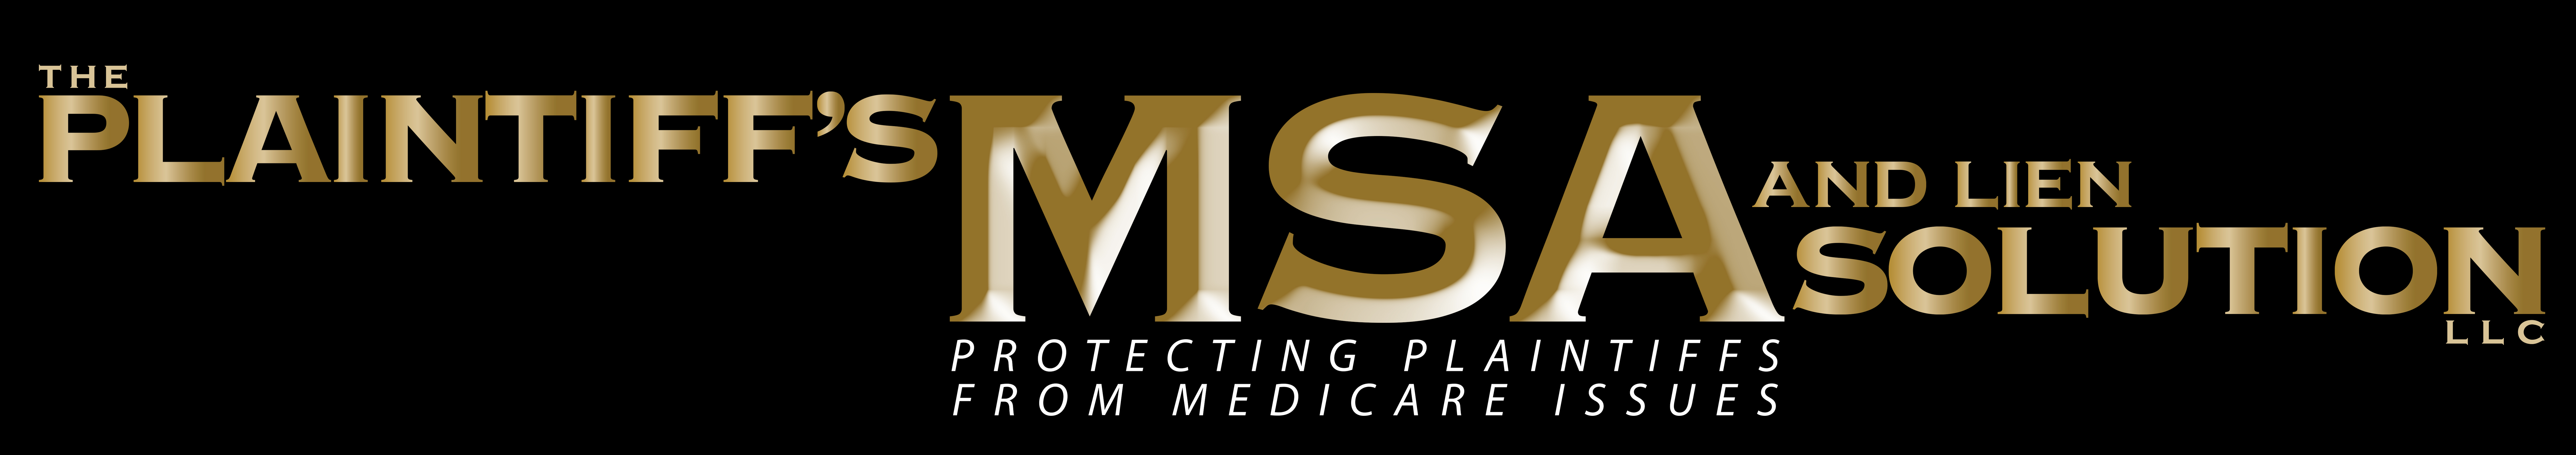 Medicare - The PLAINTIFF'S MSA AND LIEN SOLUTION